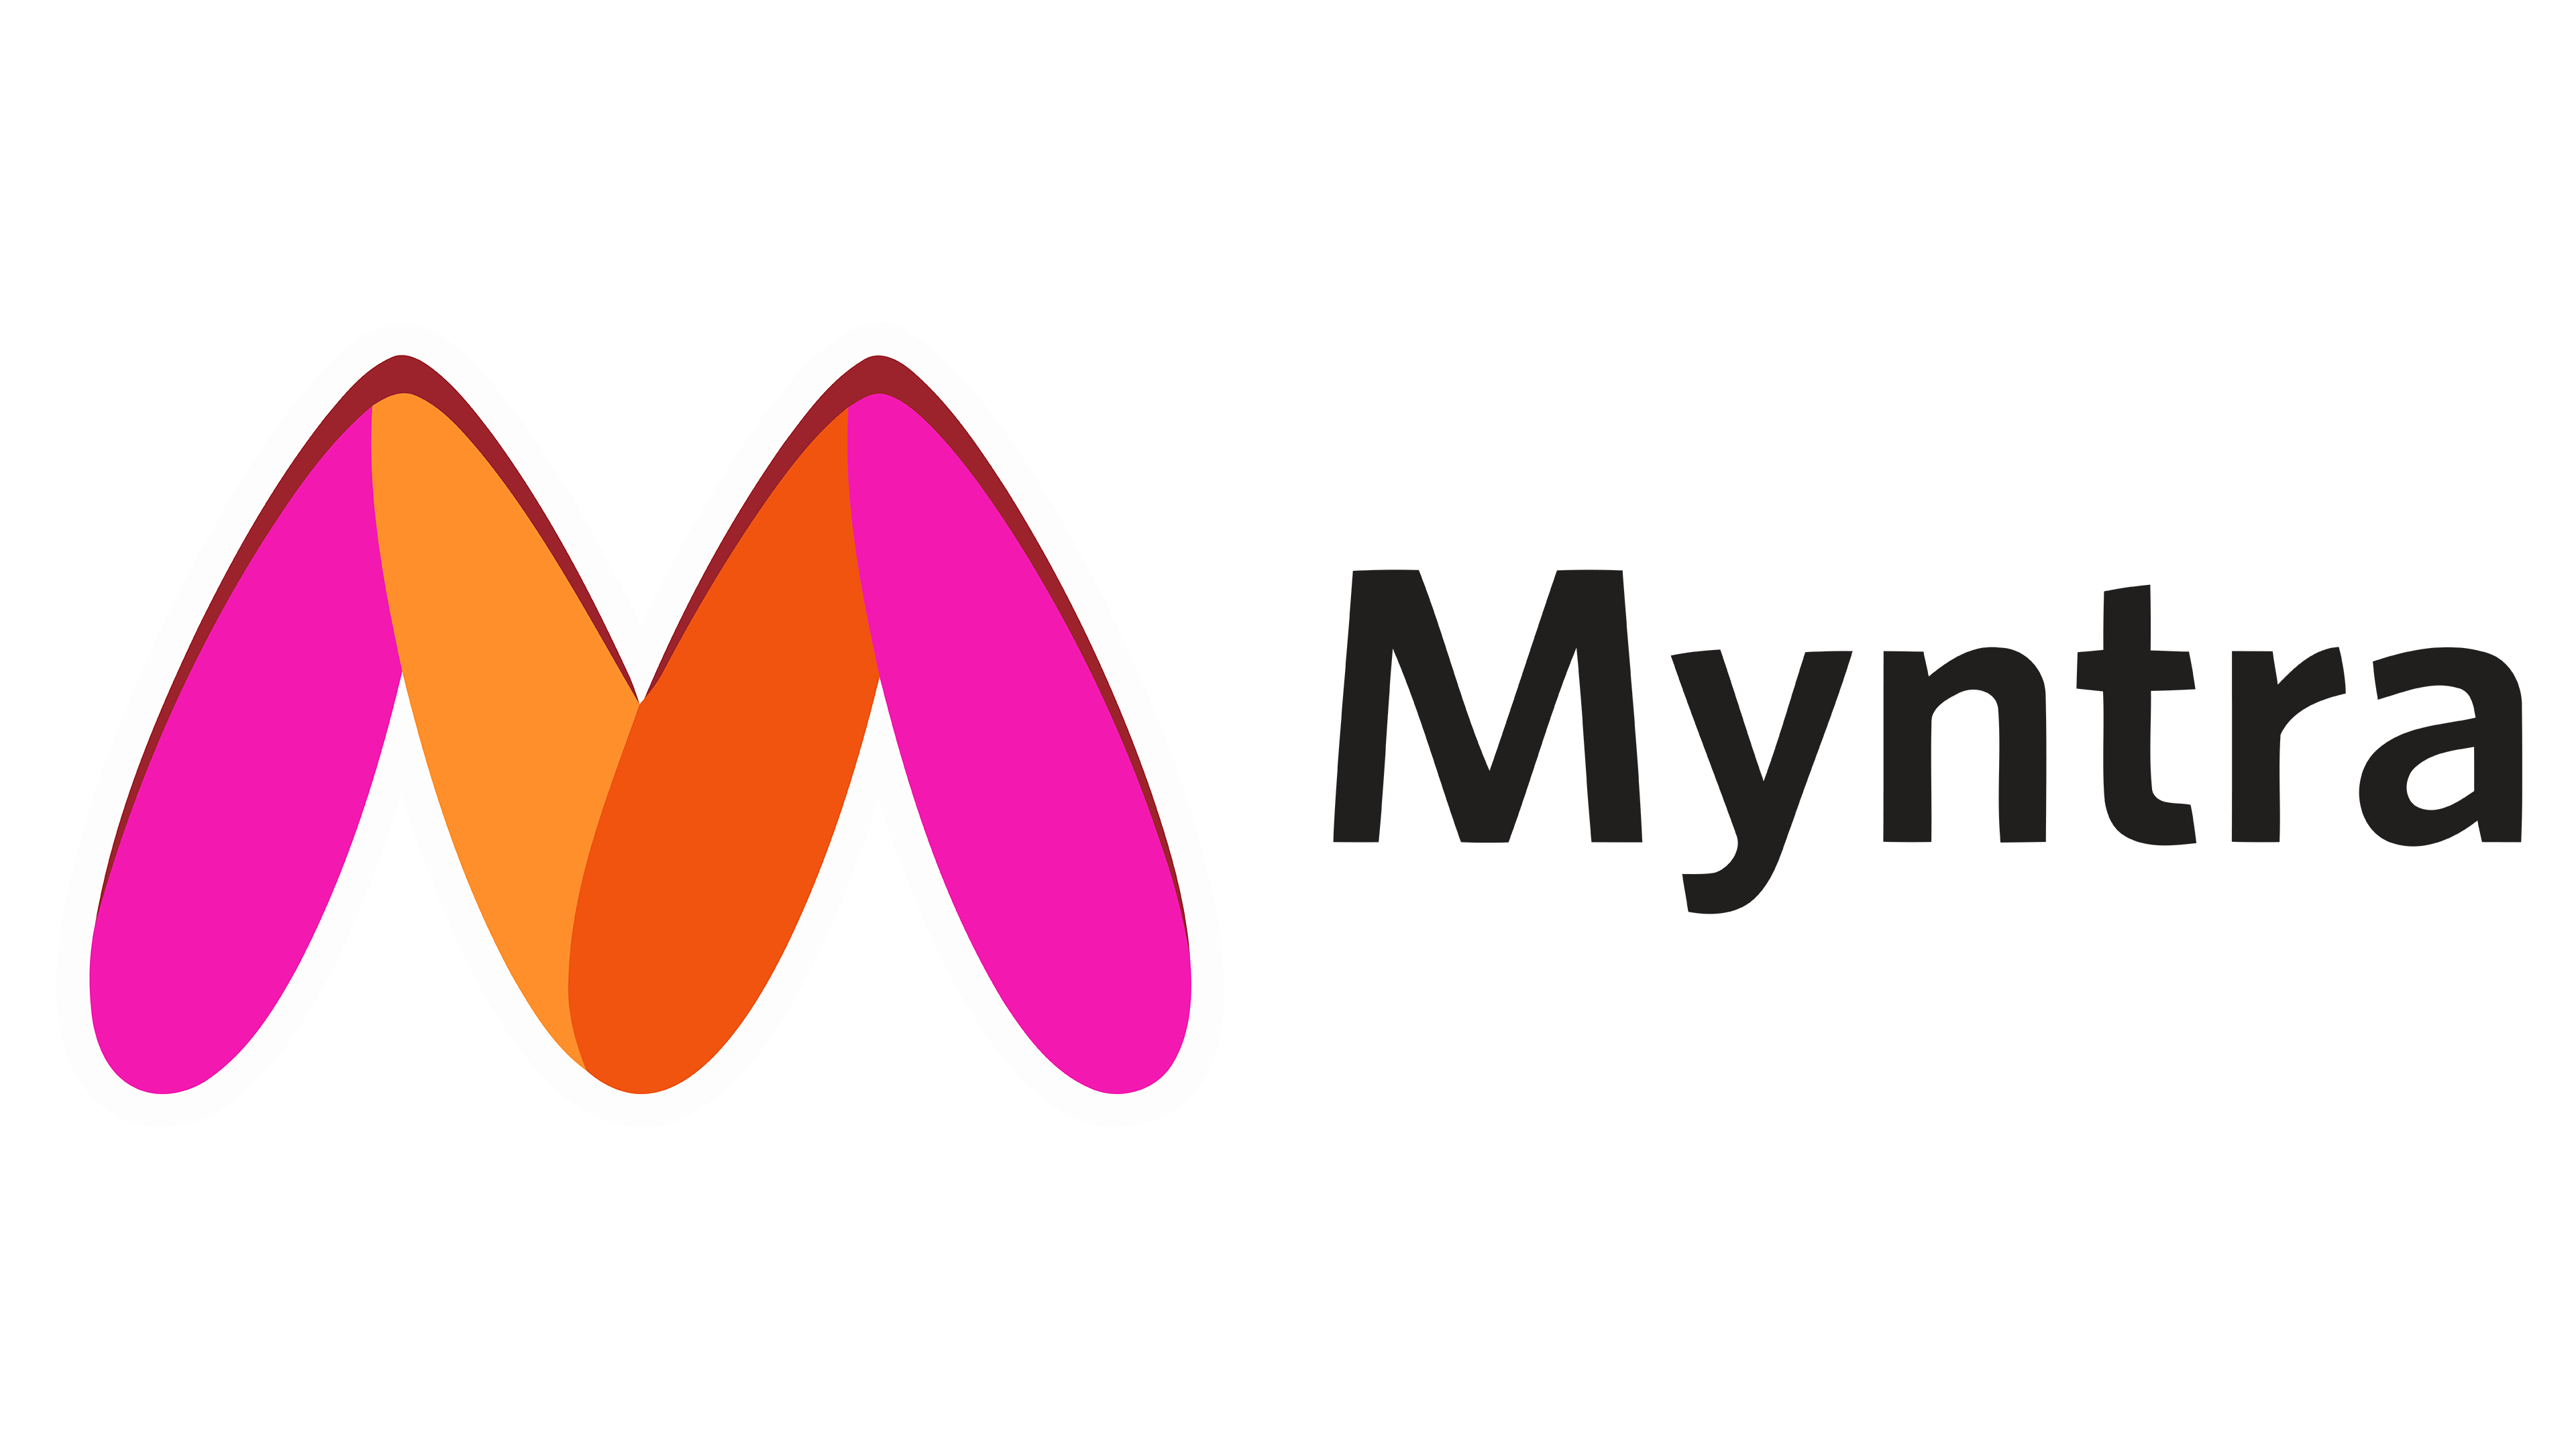 Top - Get 60% off on Fancy Girls & Women Tops Online from Myntra